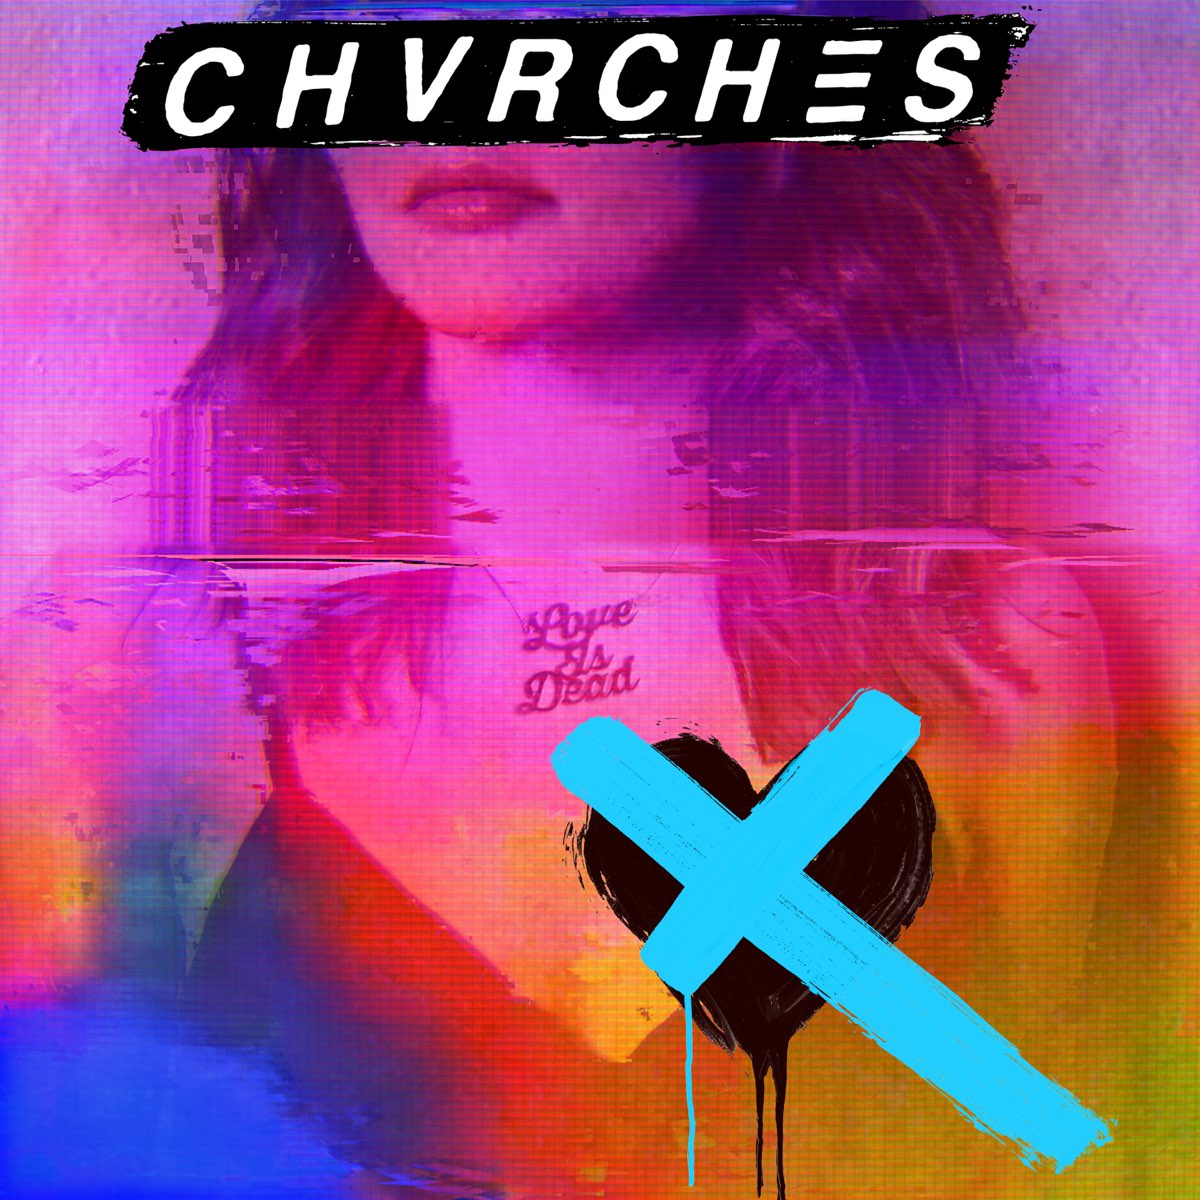 CHVRCHES — Graffiti cover artwork